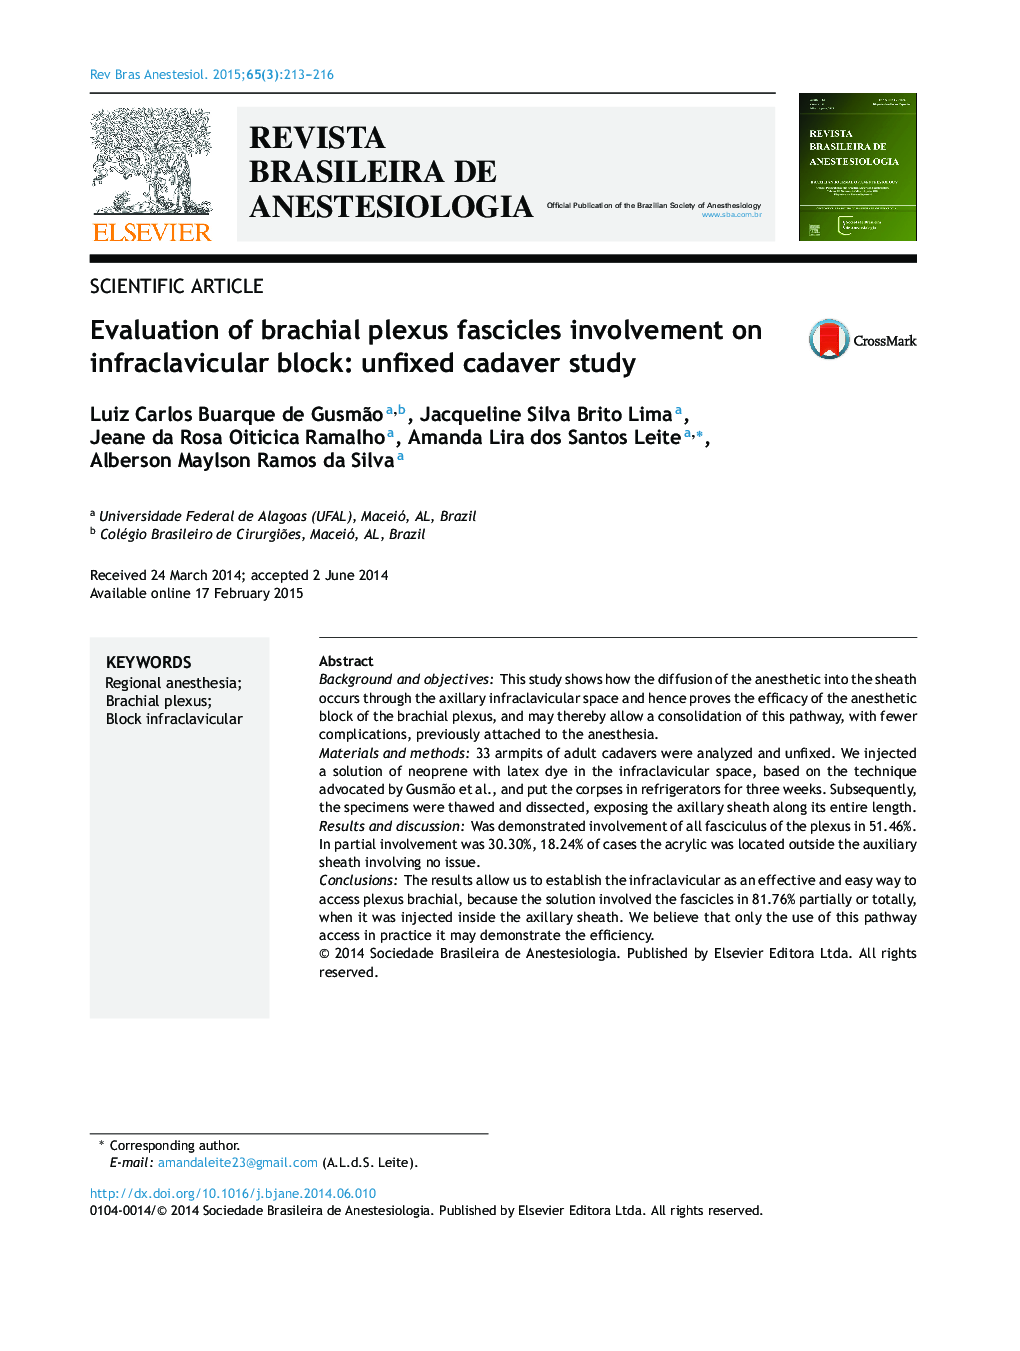 Evaluation of brachial plexus fascicles involvement on infraclavicular block: unfixed cadaver study